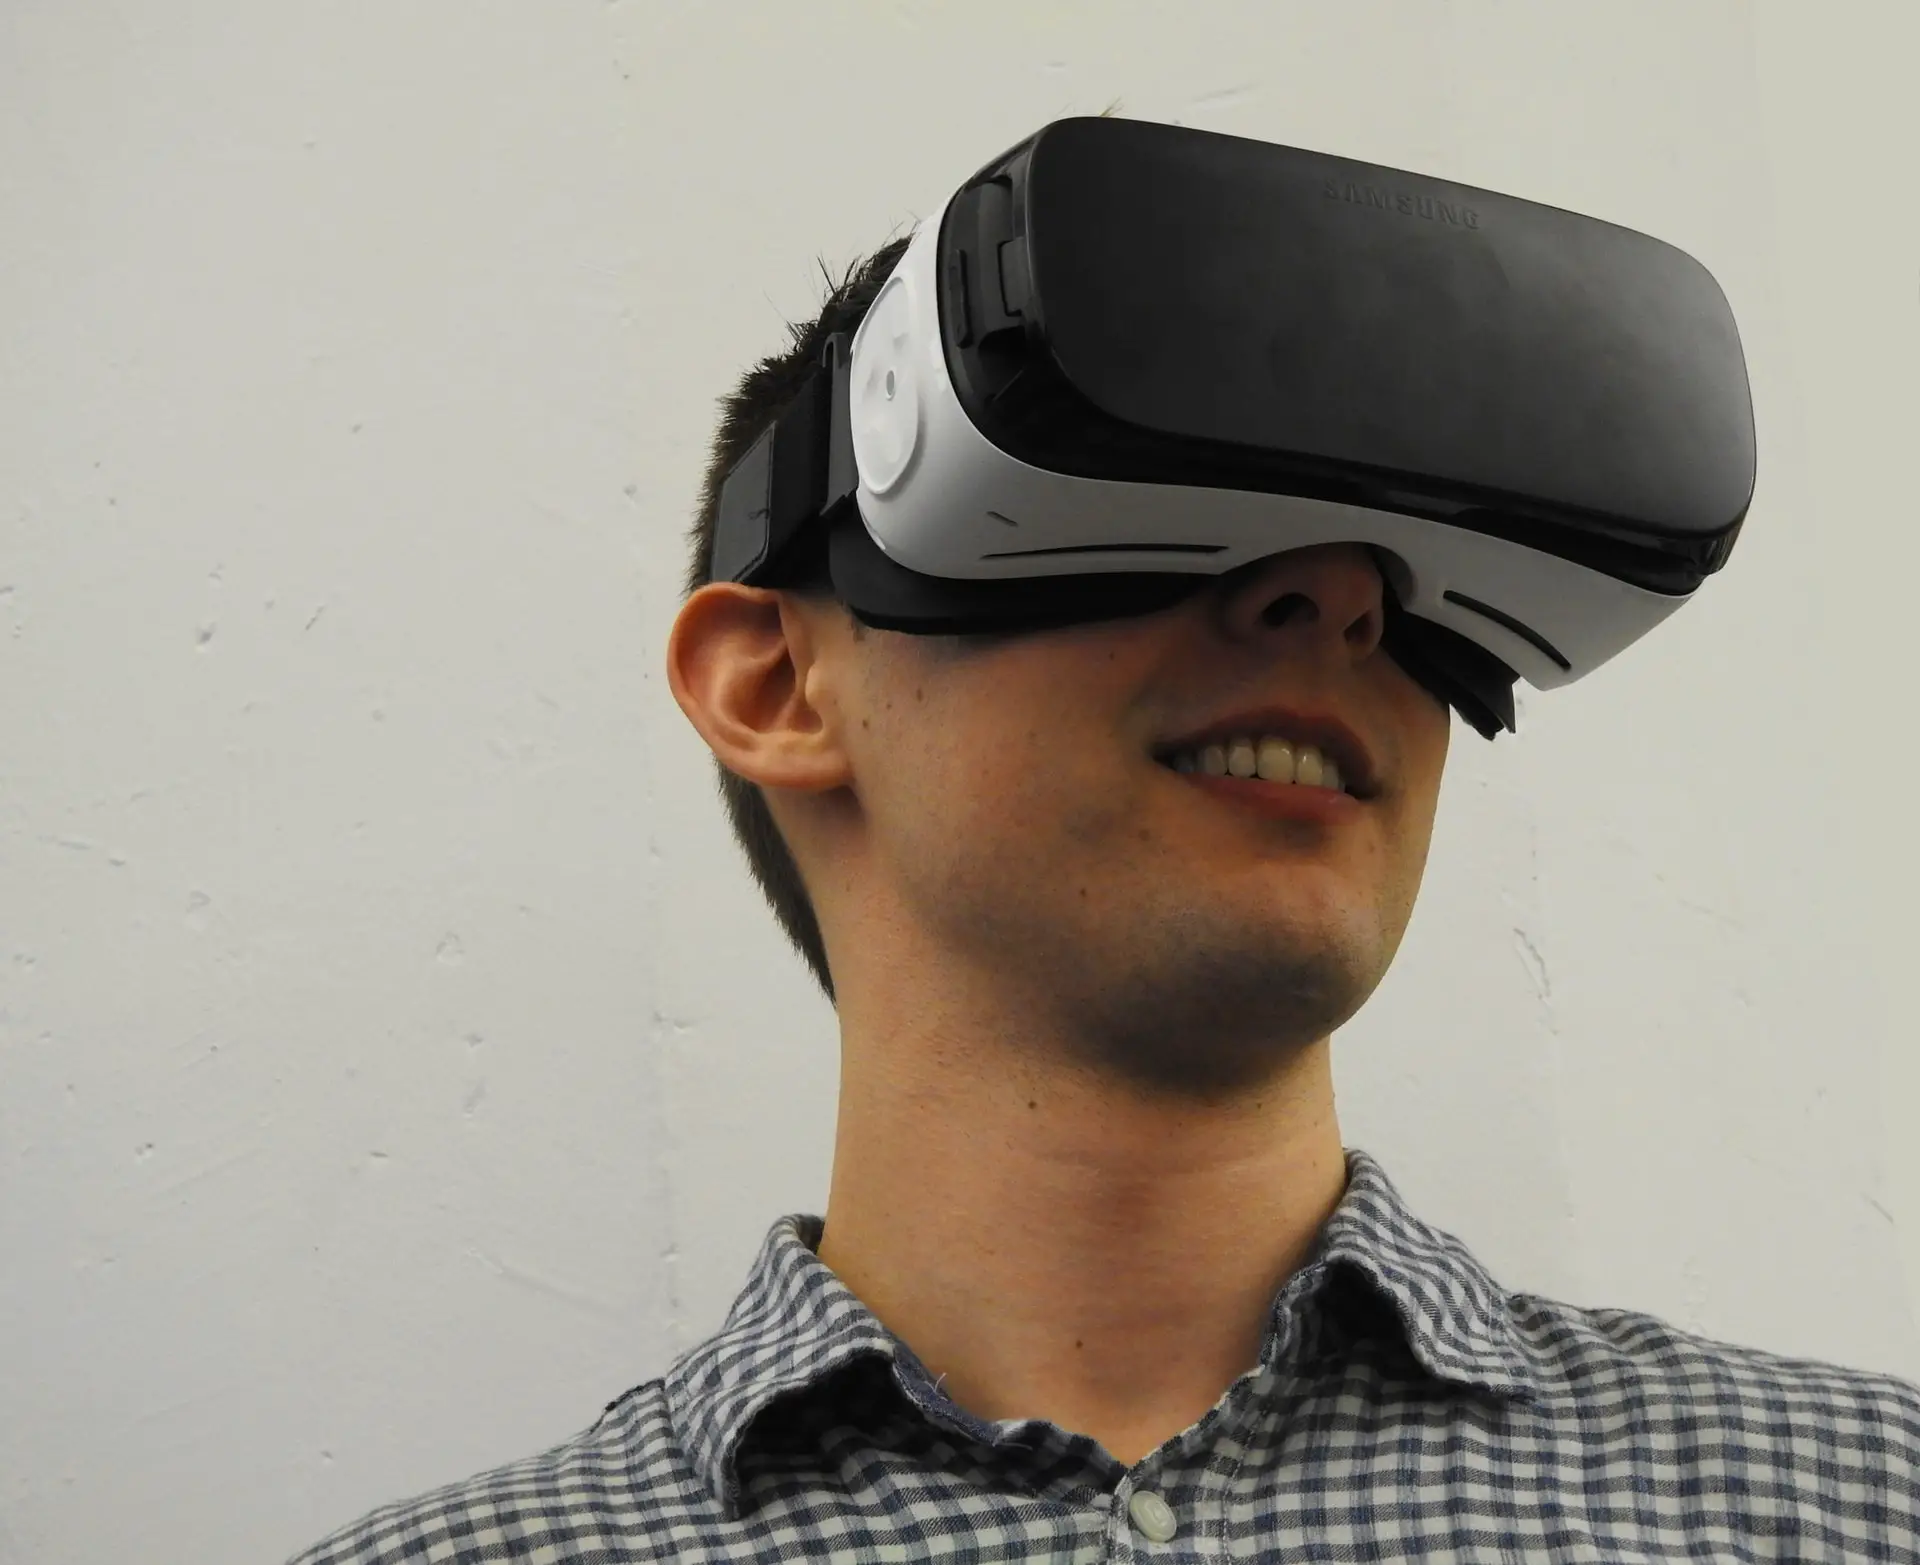 Samsung’s Peculiar VR Headset Leaks Once Again